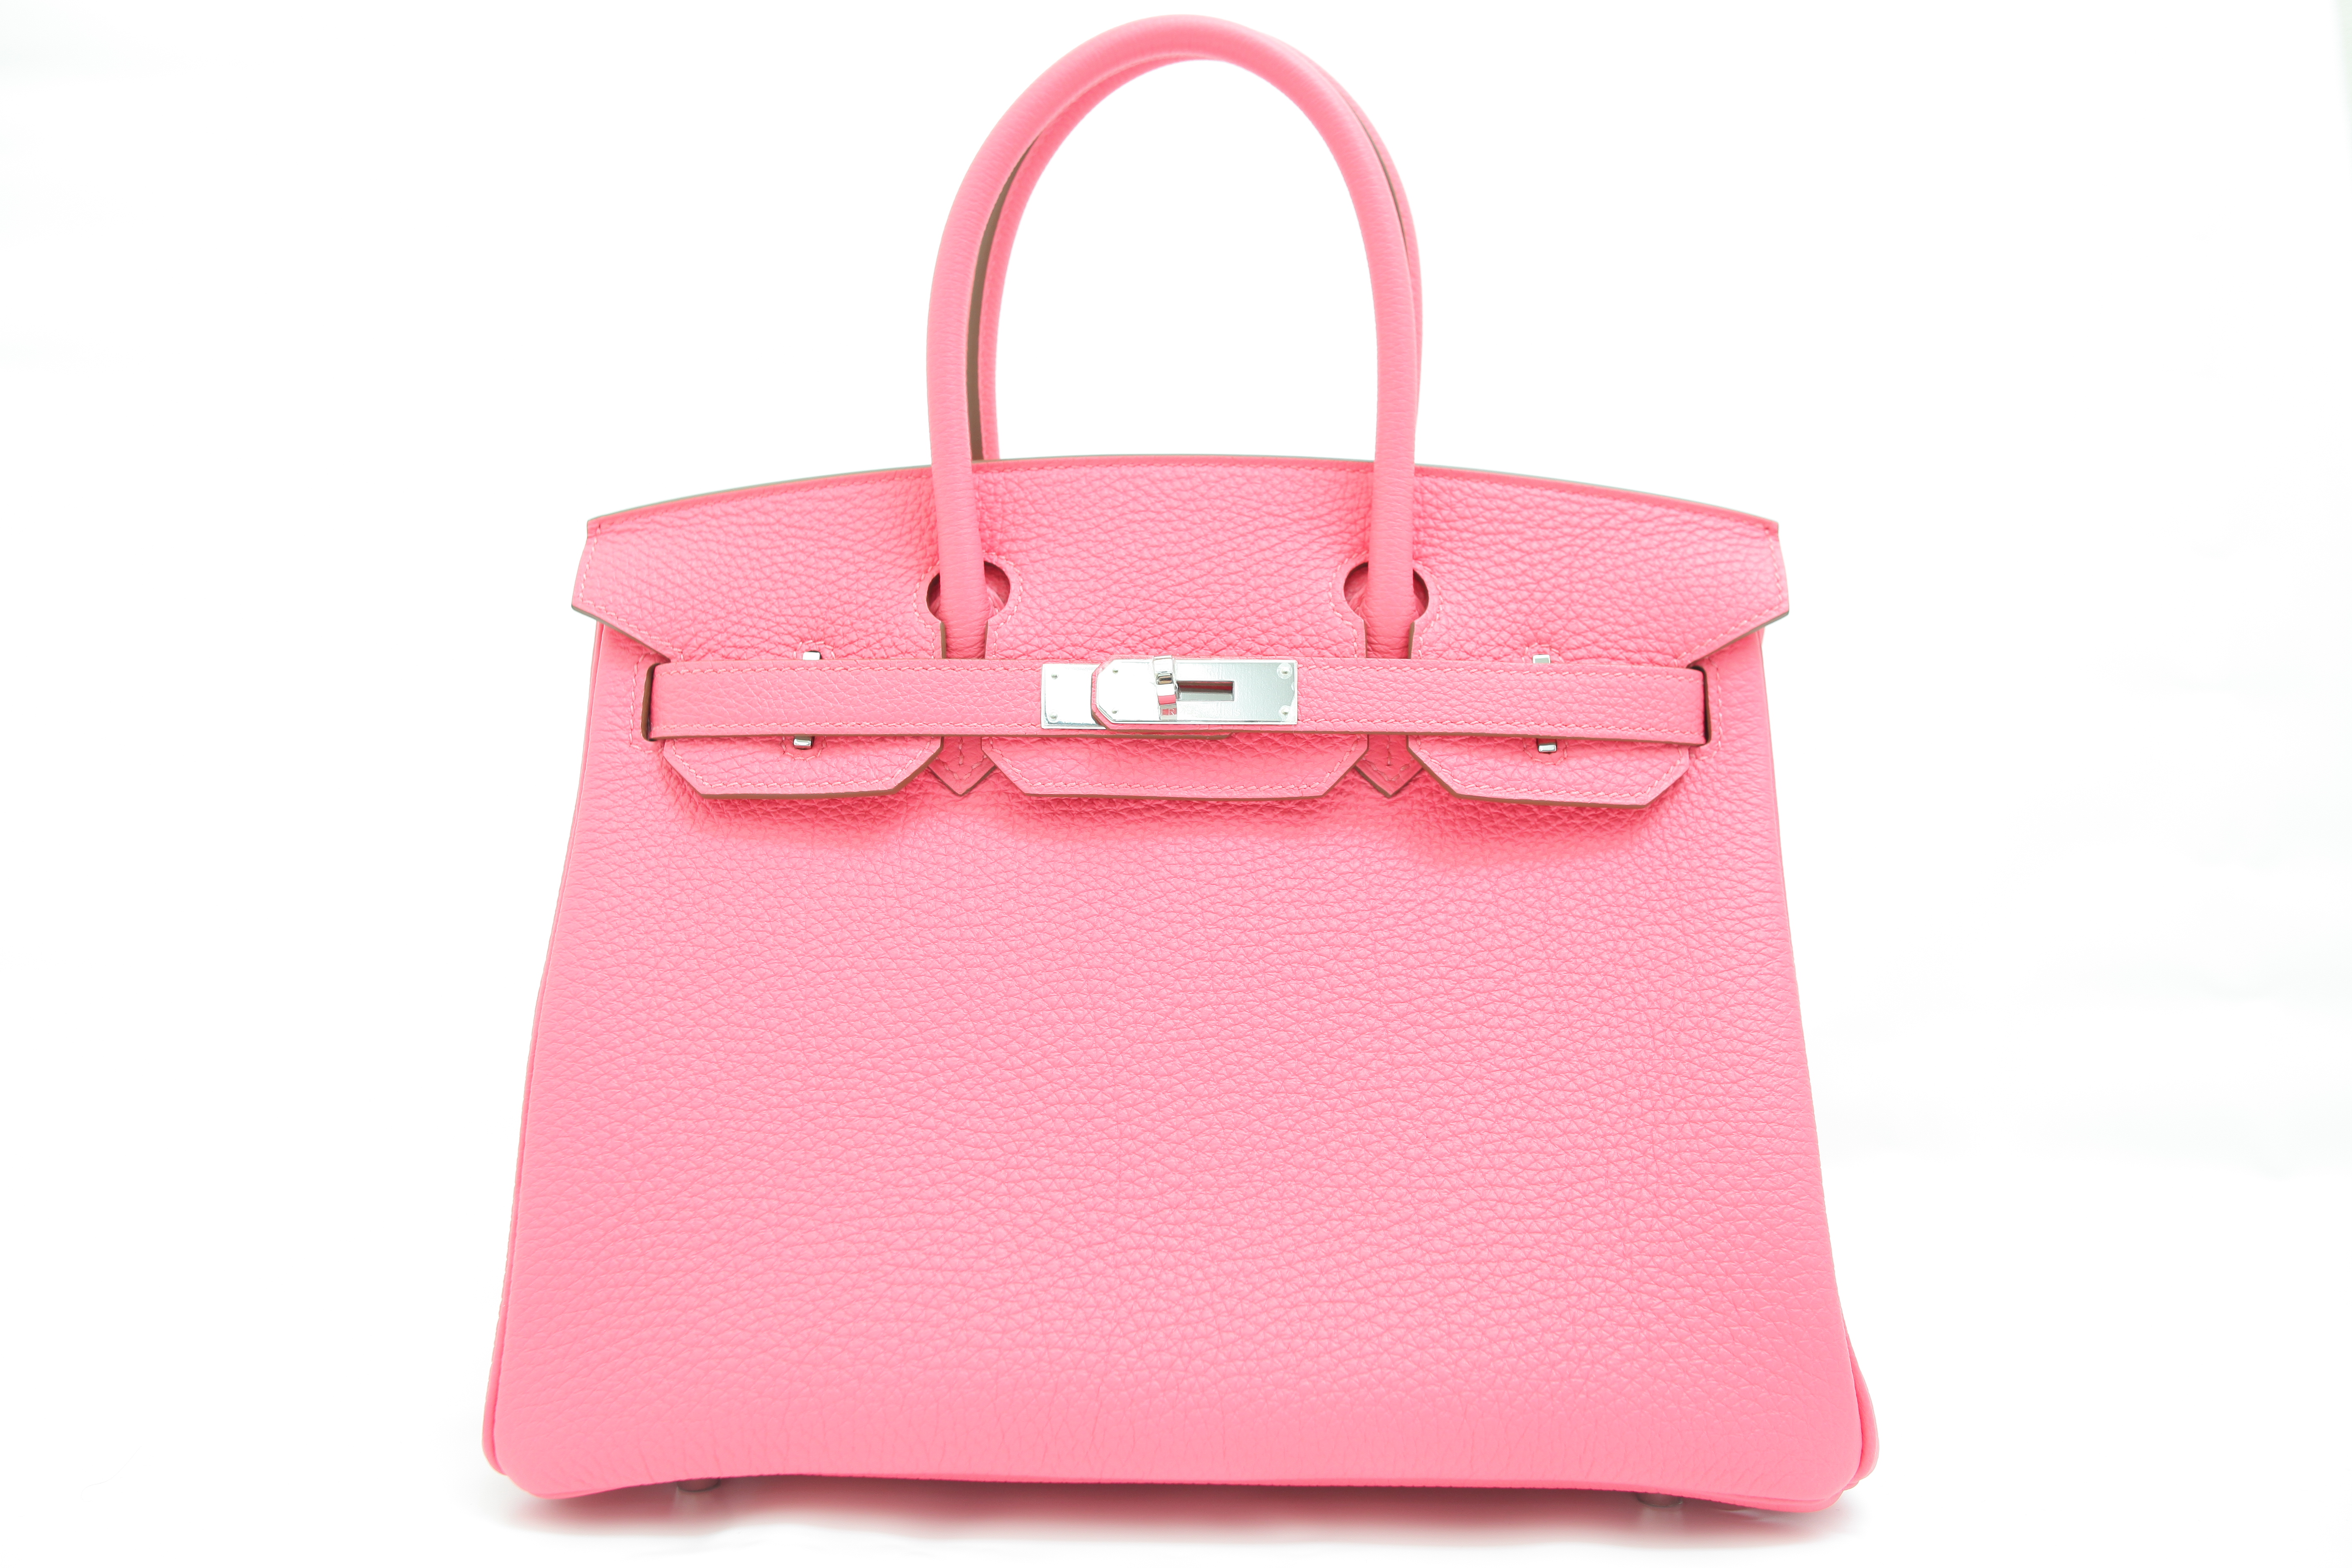 used birkin handbags - How Much Does A Hermes Birkin Bag Cost? The Same As 32,500 Pints ...